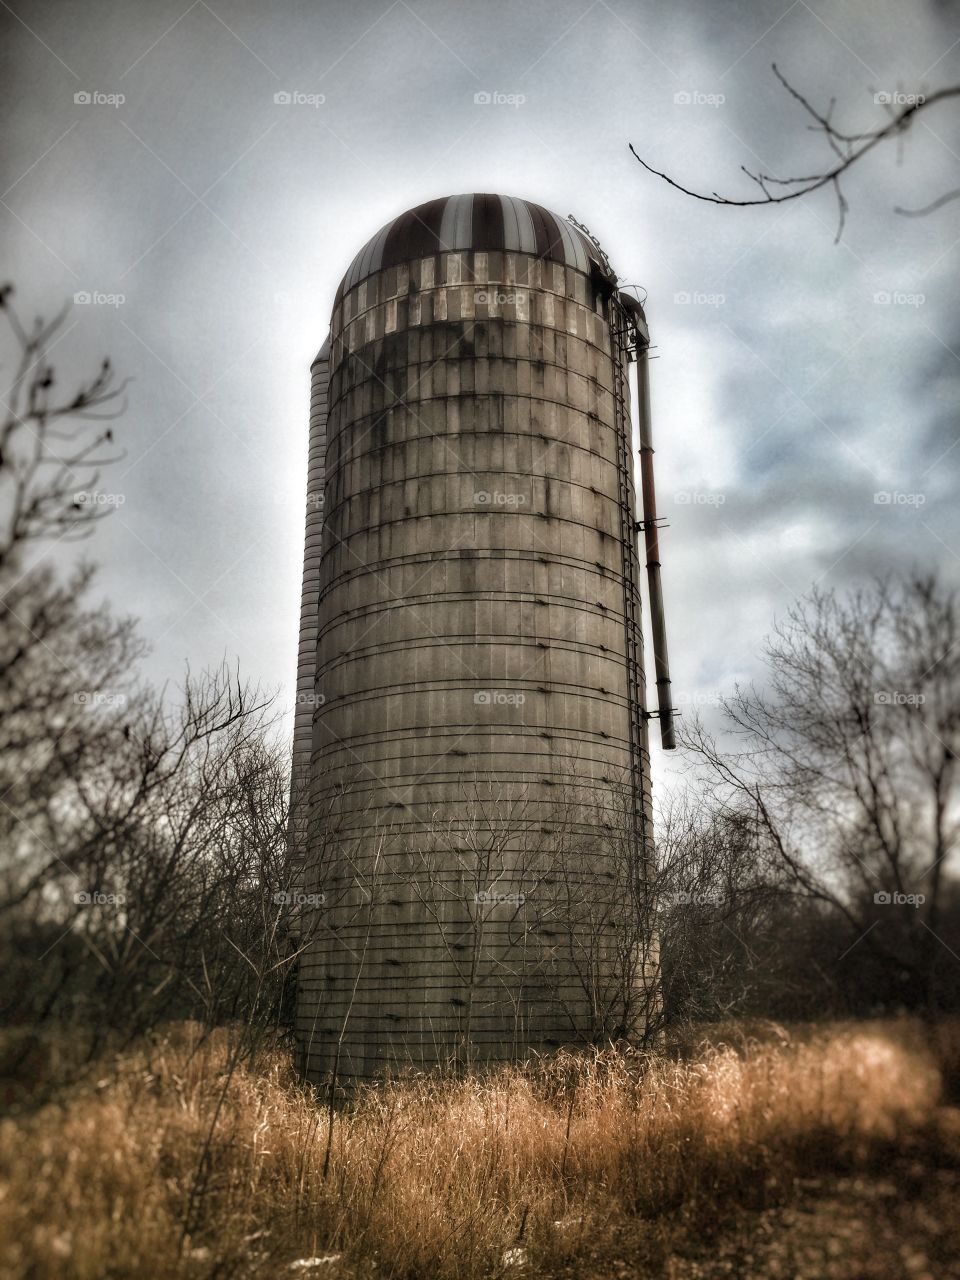 Low angle view of a silo